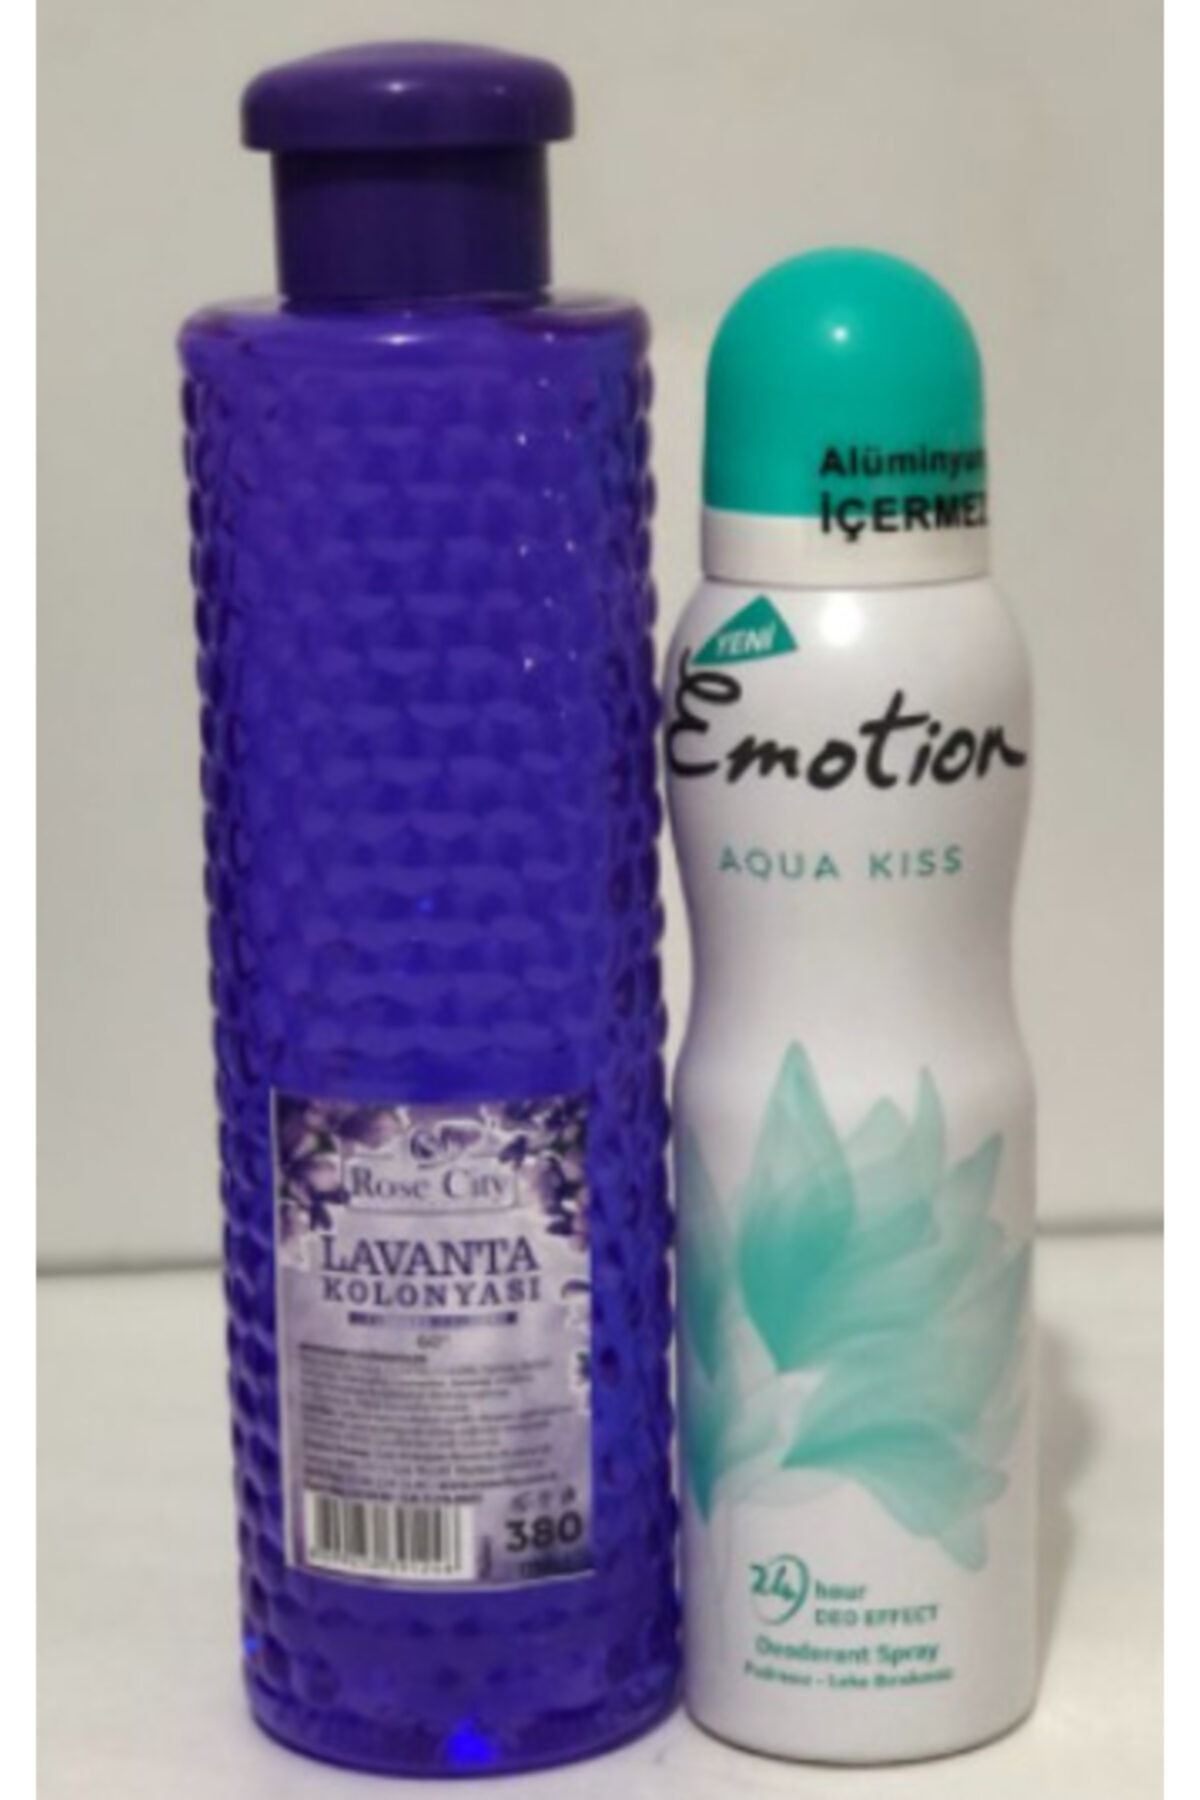 Emotion Lavanta Kolonyası 380 ml +Aqua Kıss Deodorant 150 ml